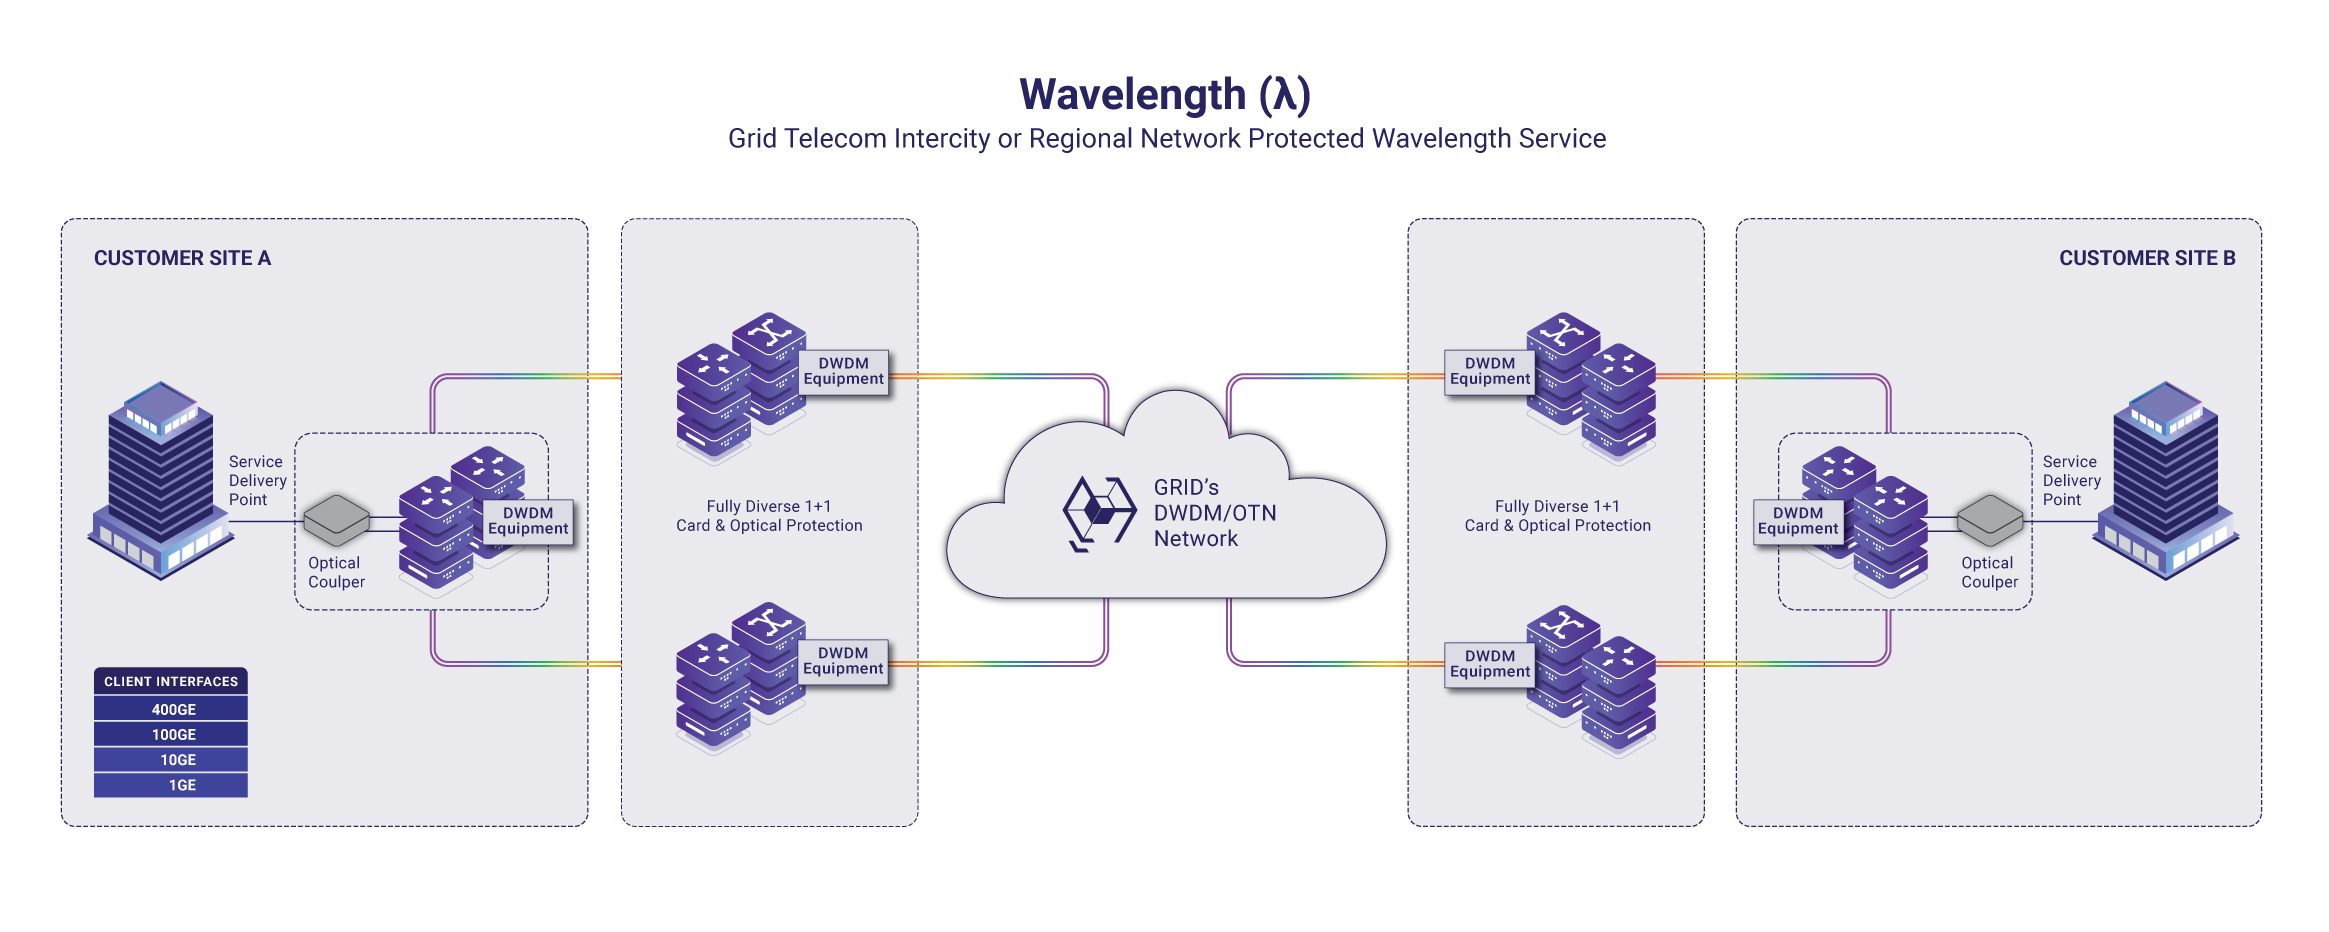 Grid Telecom Intercity or Regional Network Protected Wavelength Service